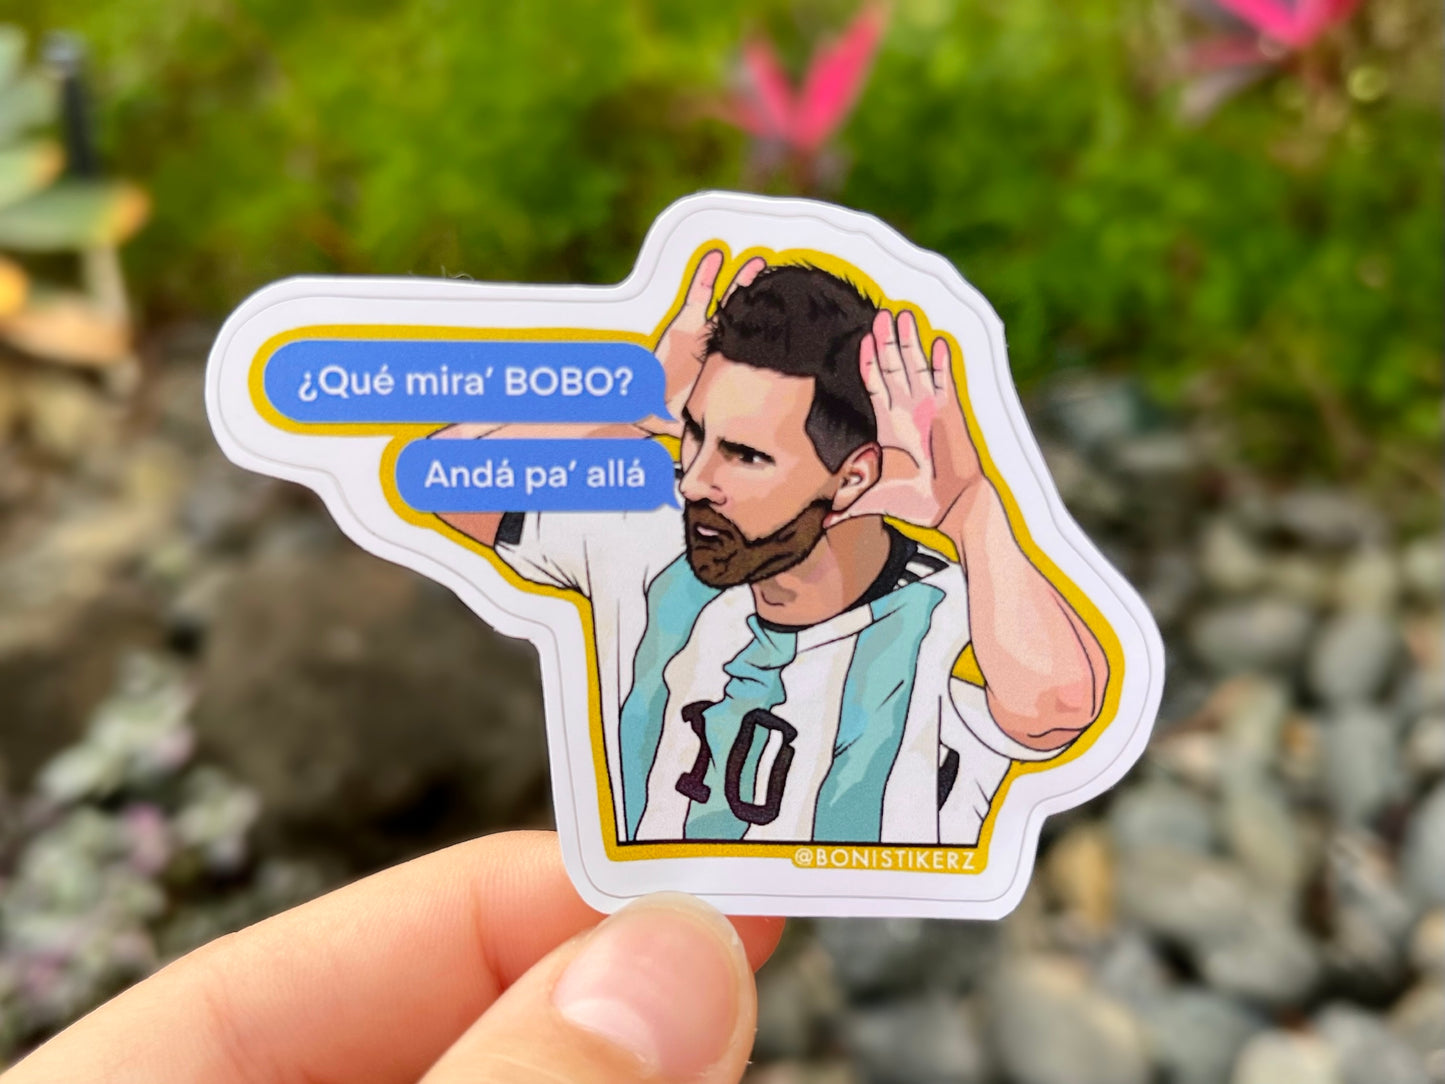 Messi "que mira bobo" - Fifa World Cup sticker